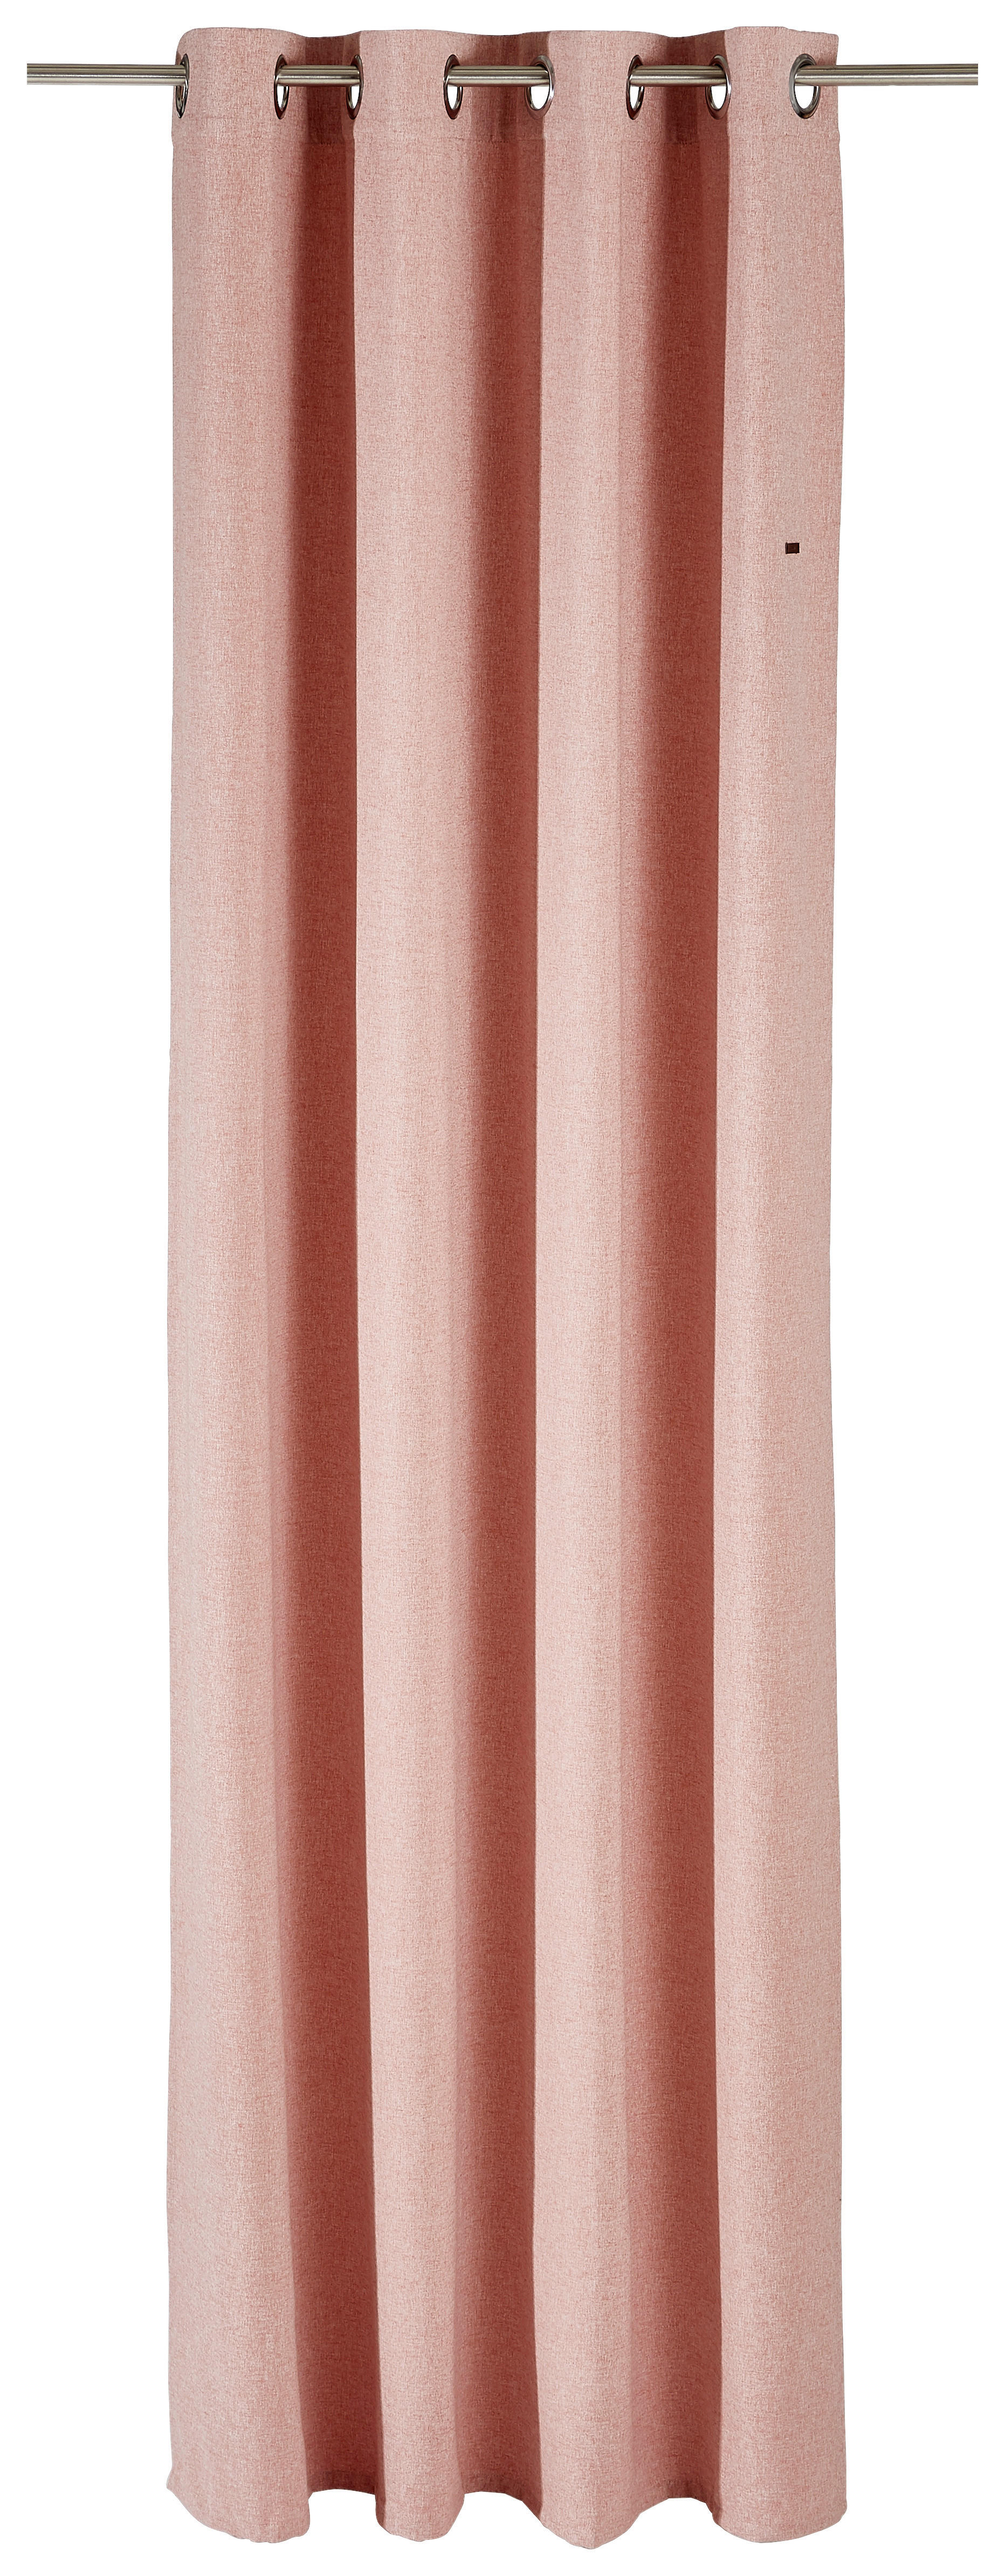 ÖSENSCHAL E-Harp blickdicht 140/250 cm   - Altrosa, Basics, Textil (140/250cm) - Esprit